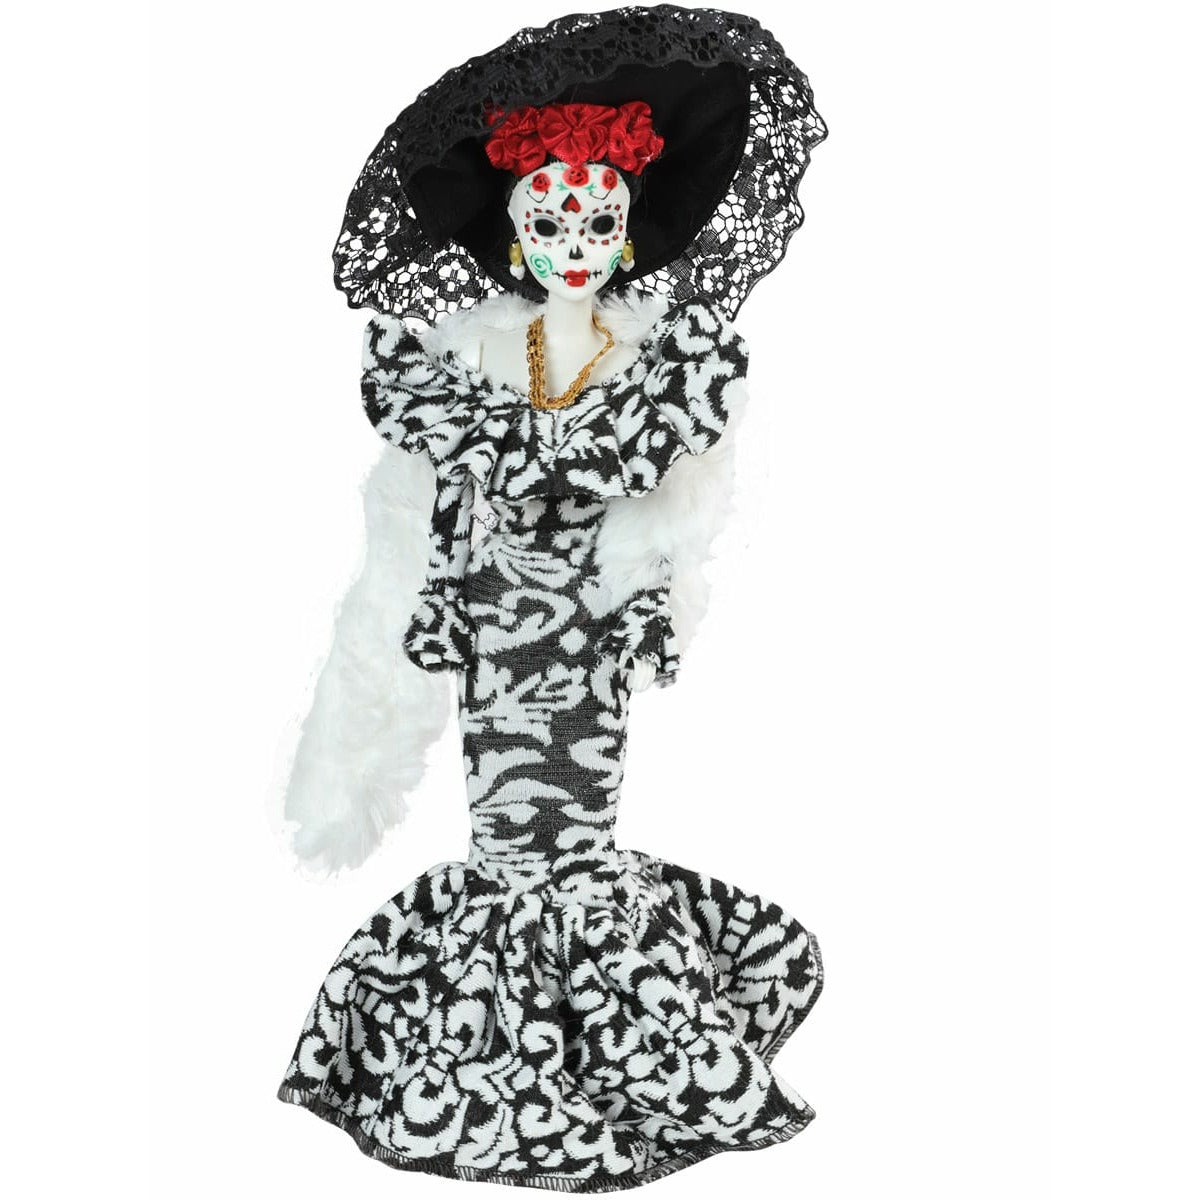 Mexican Handmade Catrina Dia de los Muertos Doll - CharroAzteca.com